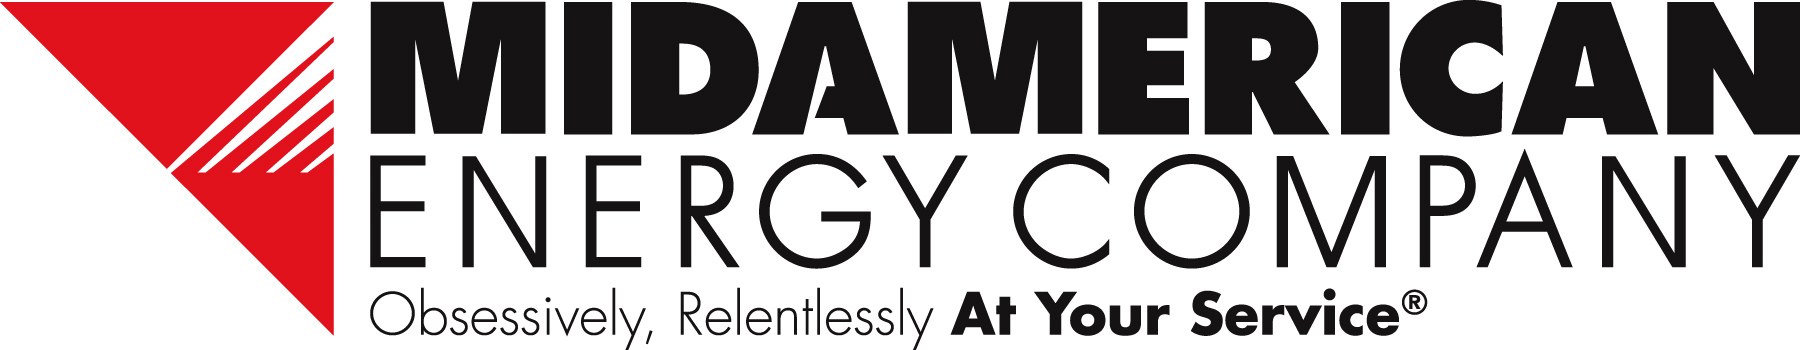 Midamerican Energy Company